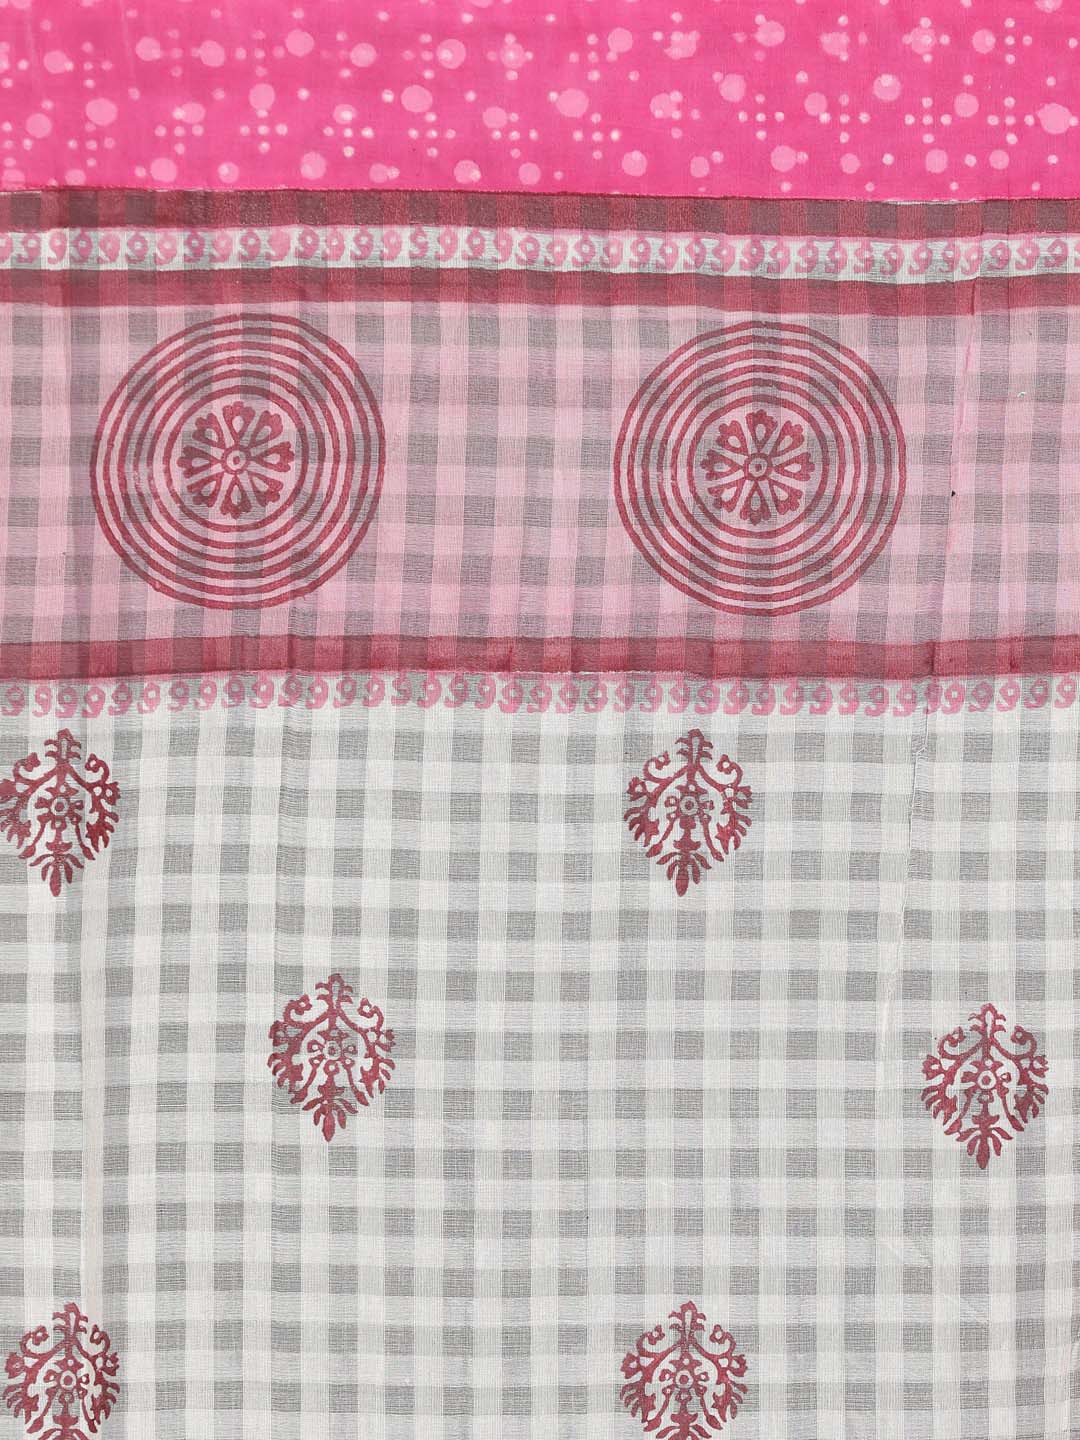 Indethnic Printed Cotton Blend Saree in pink - Saree Detail View